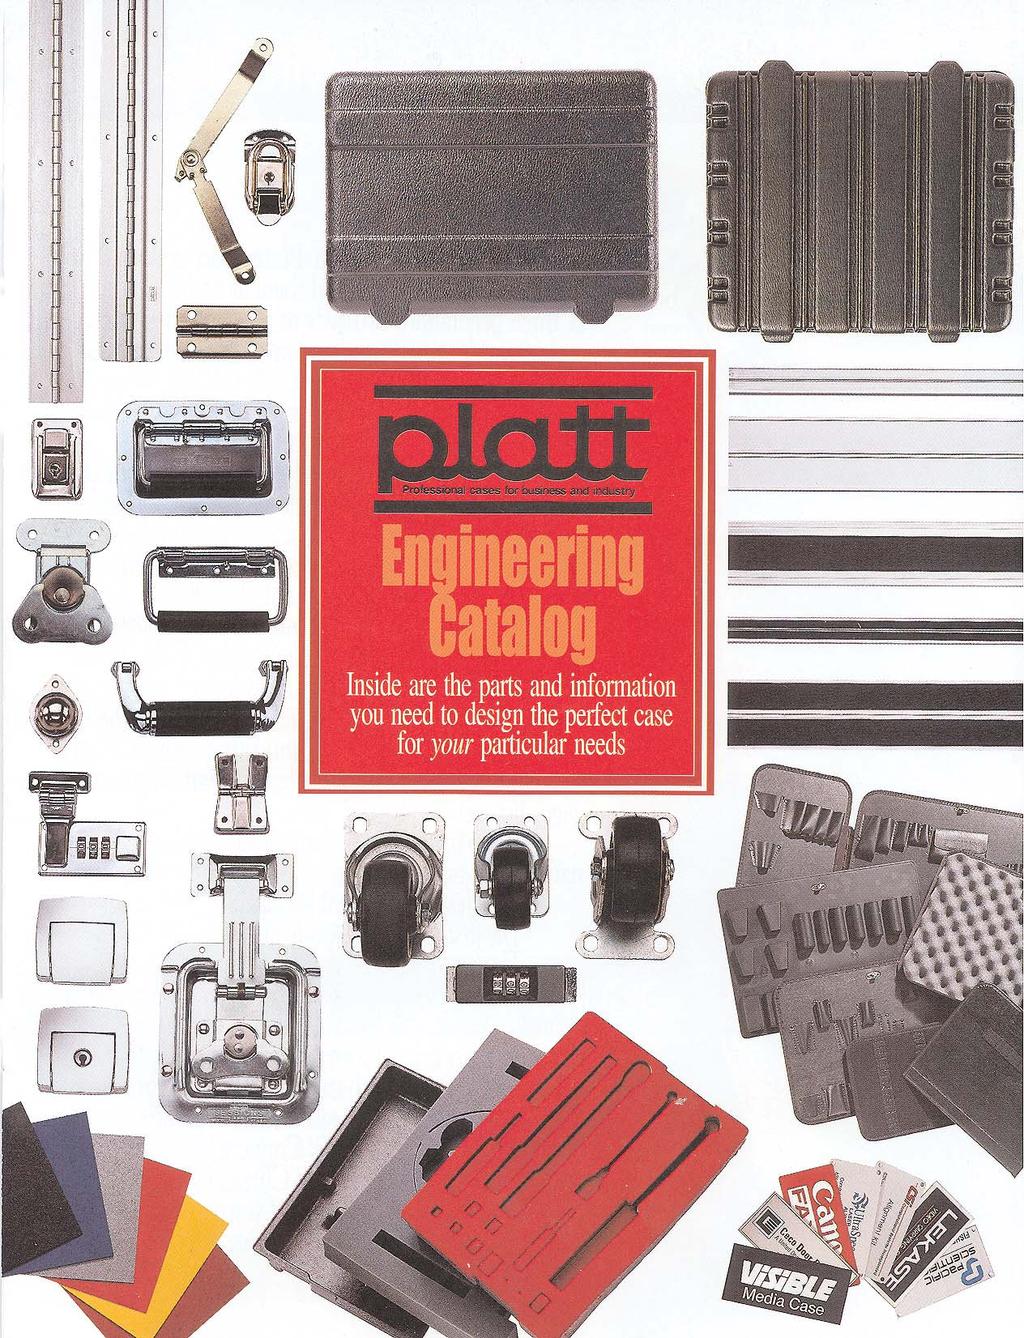 Engineering Catalog Inside